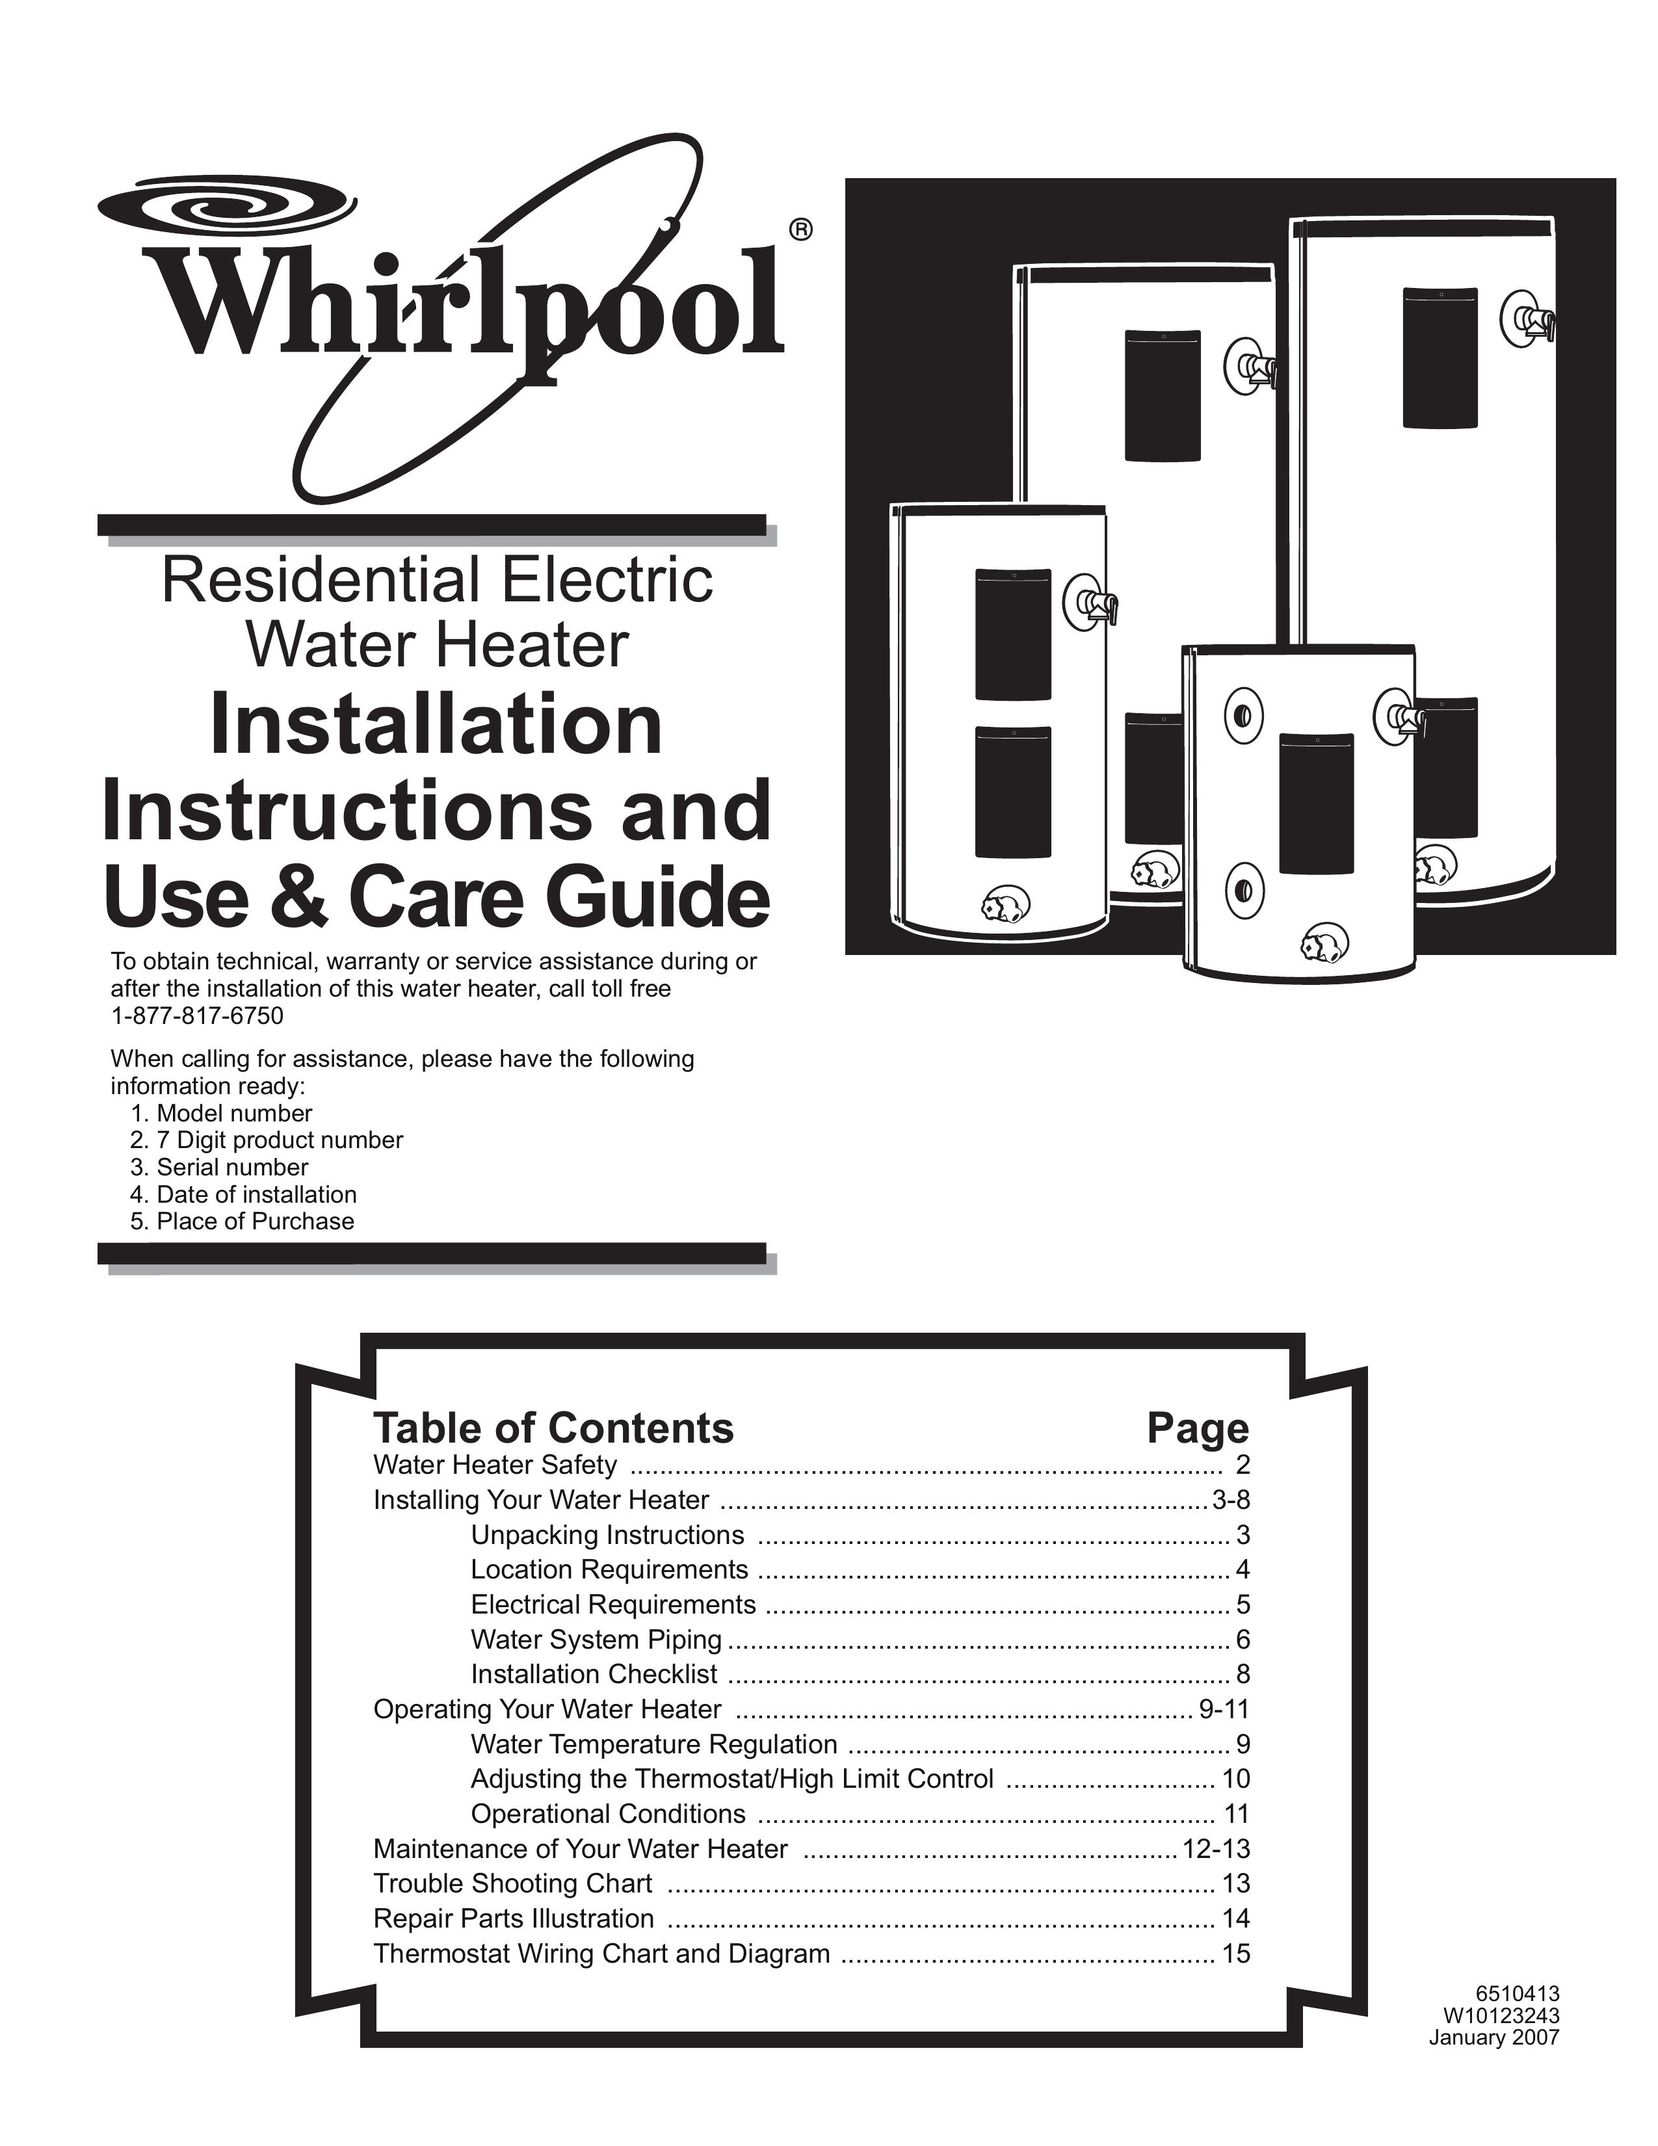 Whirlpool 140426 Water Heater User Manual